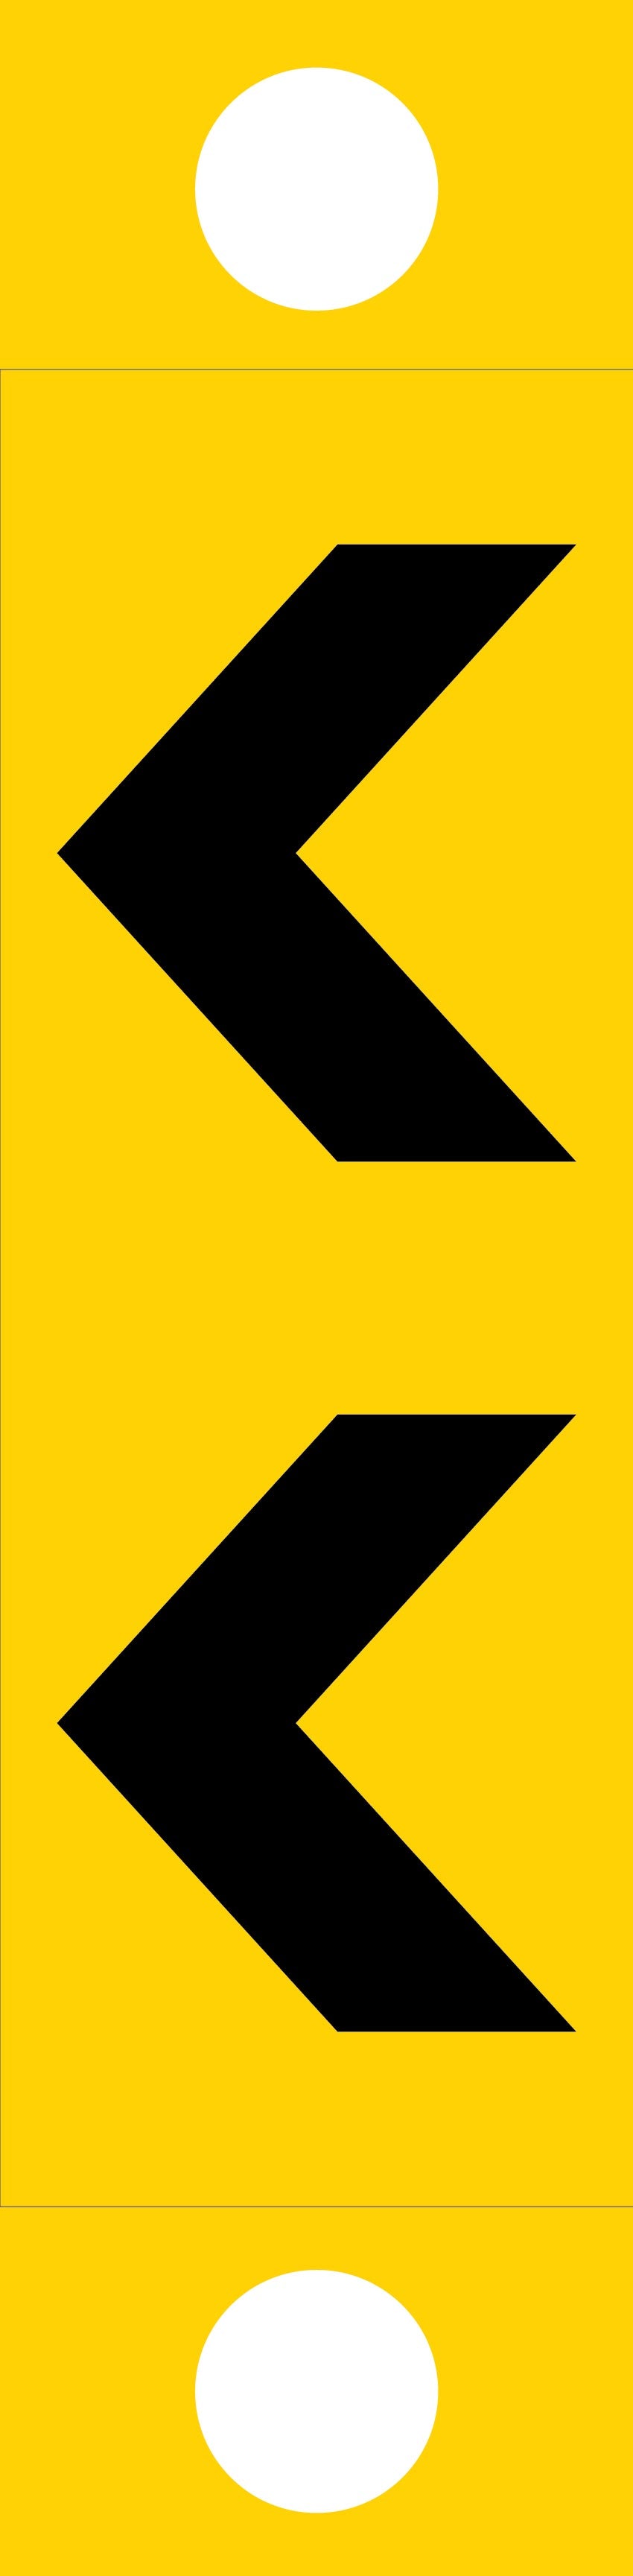 Left Arrow - Corflute Bollard Traffic Signs